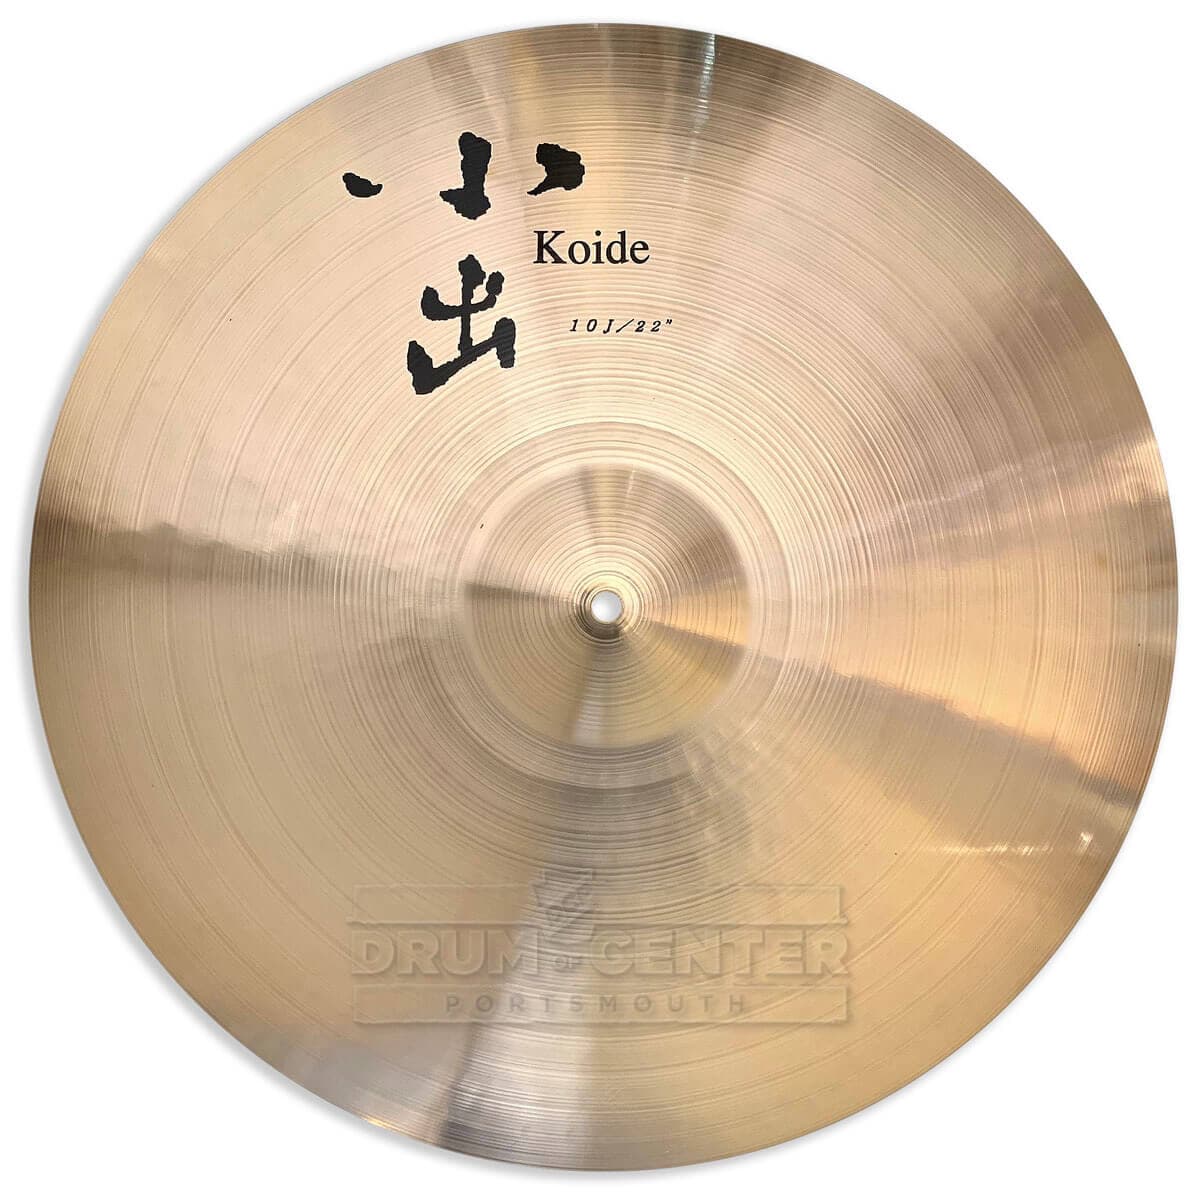 Koide 10J Traditional Ride Cymbal 22"